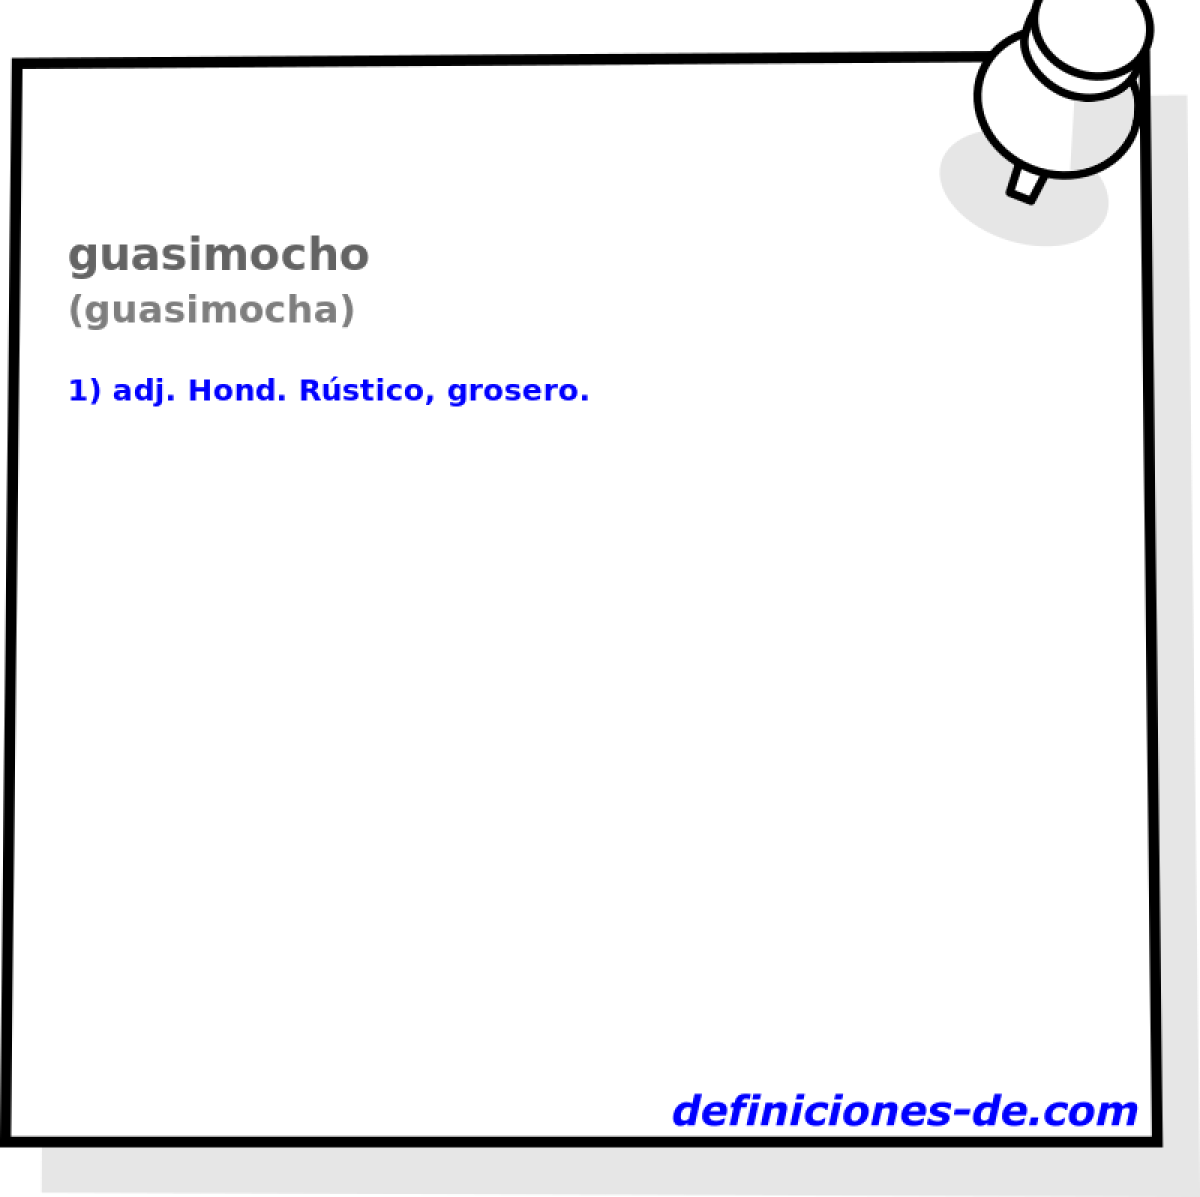 guasimocho (guasimocha)